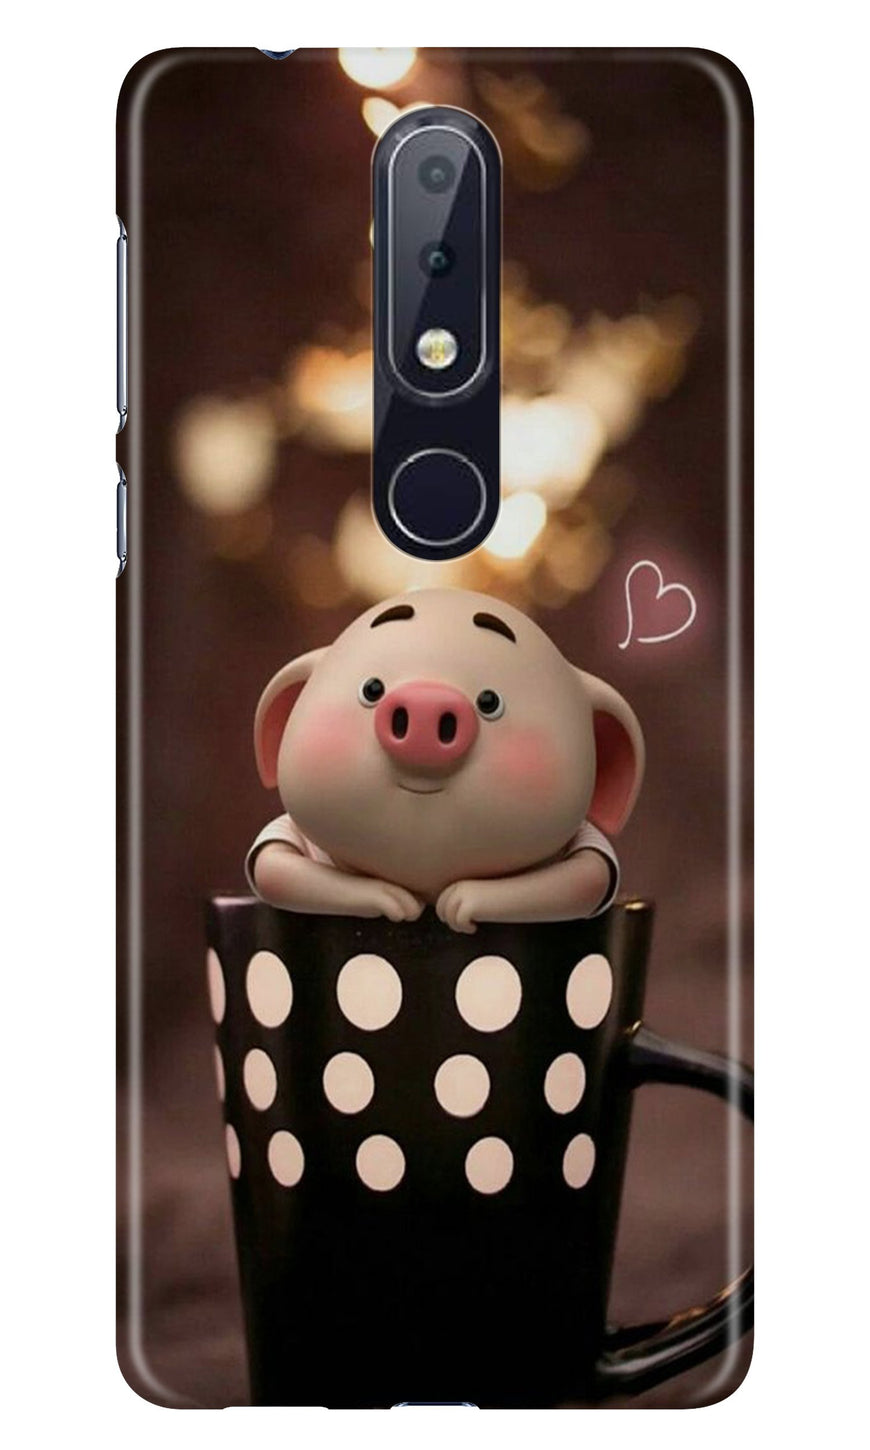 Cute Bunny Case for Nokia 6.1 Plus (Design No. 213)